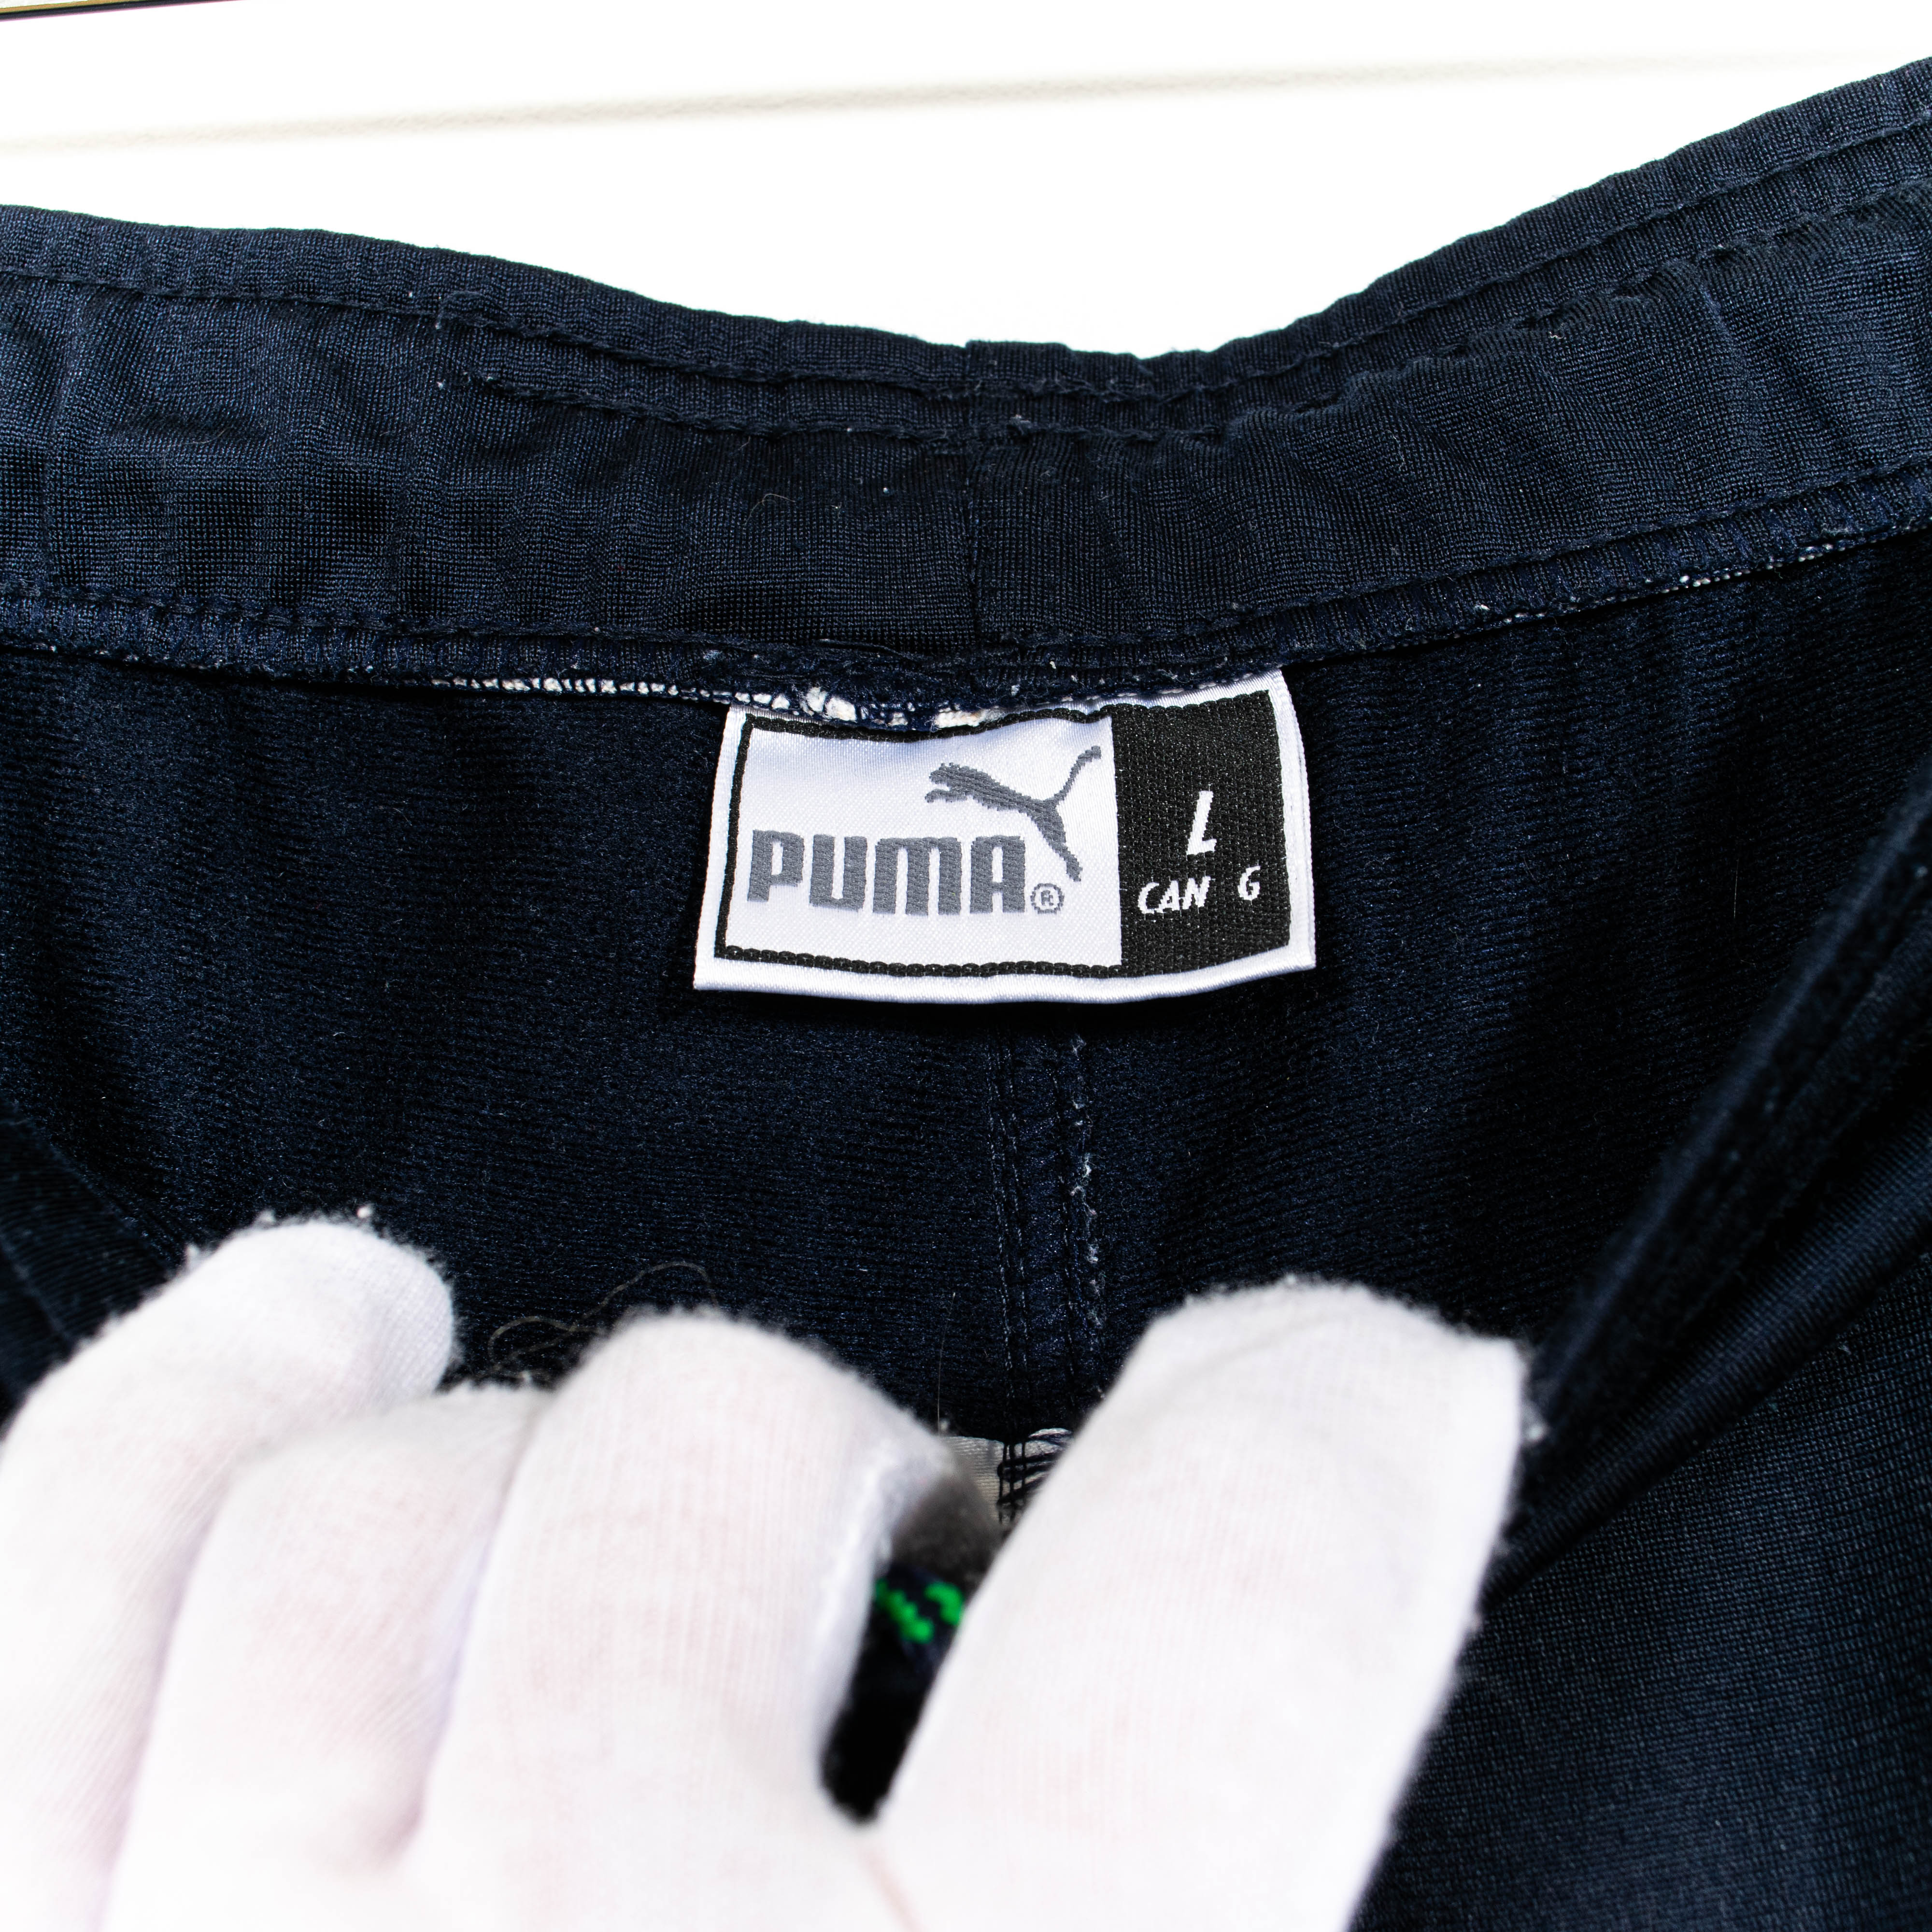 Puma King Dark Blue Green Details Ankle Zipper Track Pants Mens US31